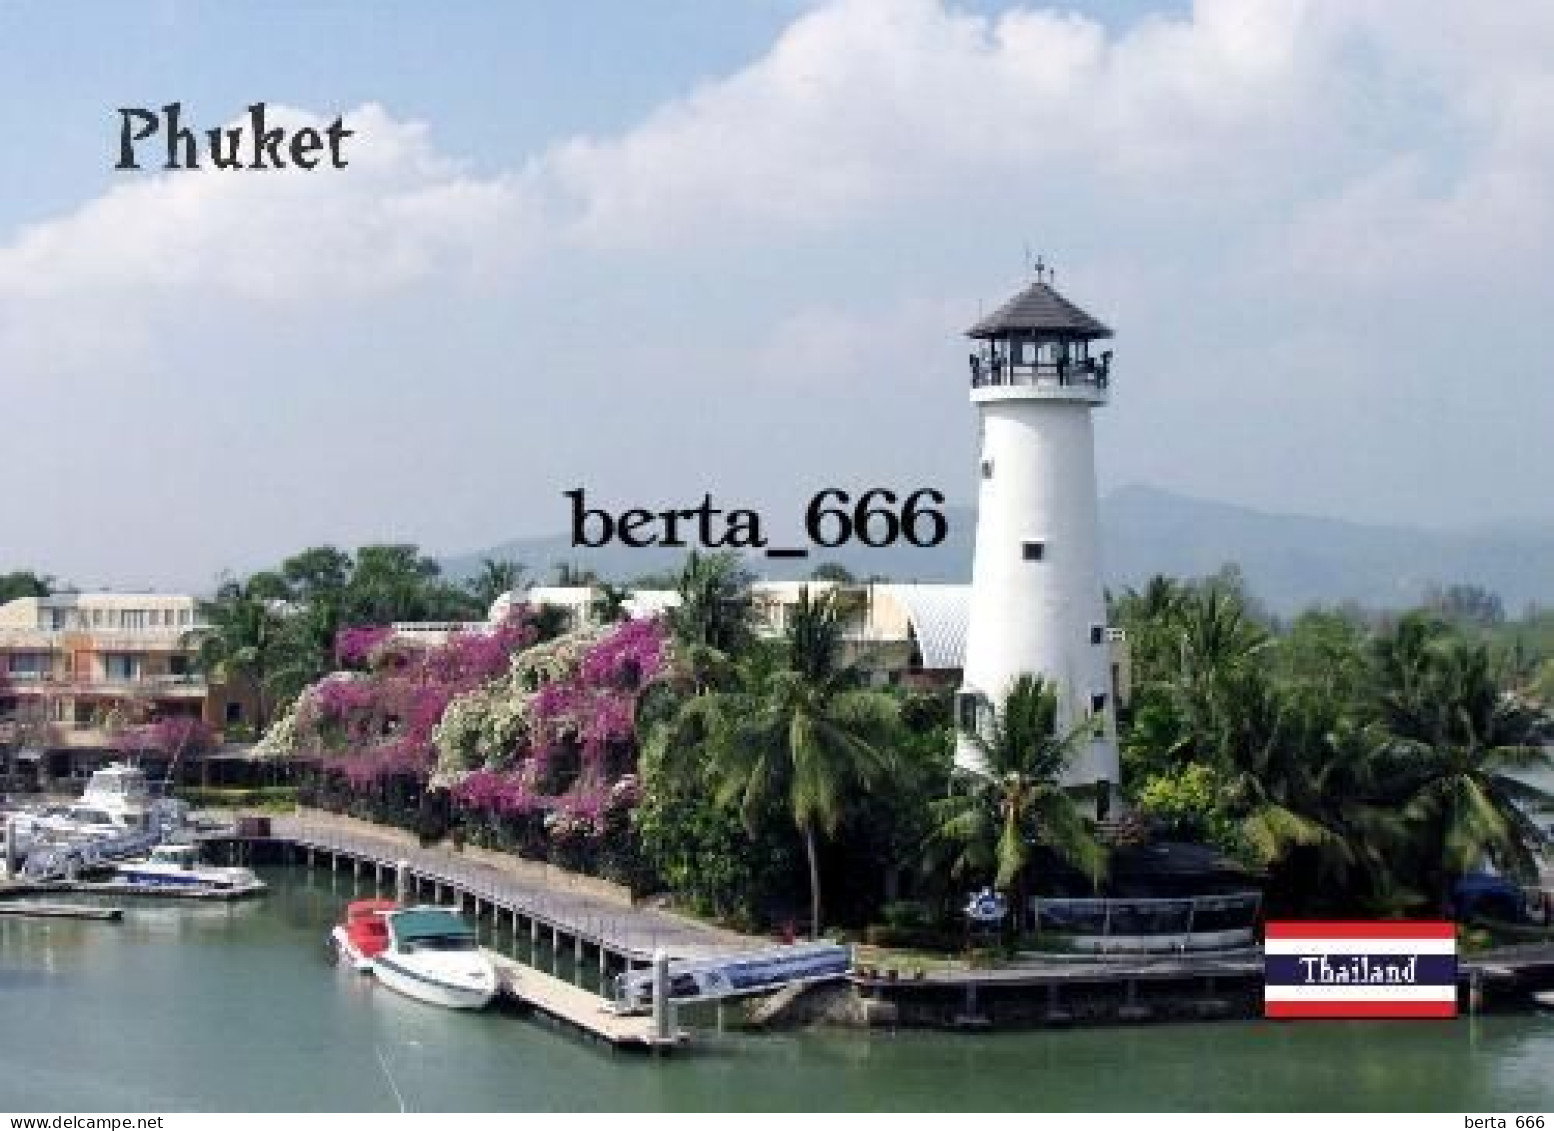 Thailand Phuket Island Lighthouse New Postcard - Vuurtorens